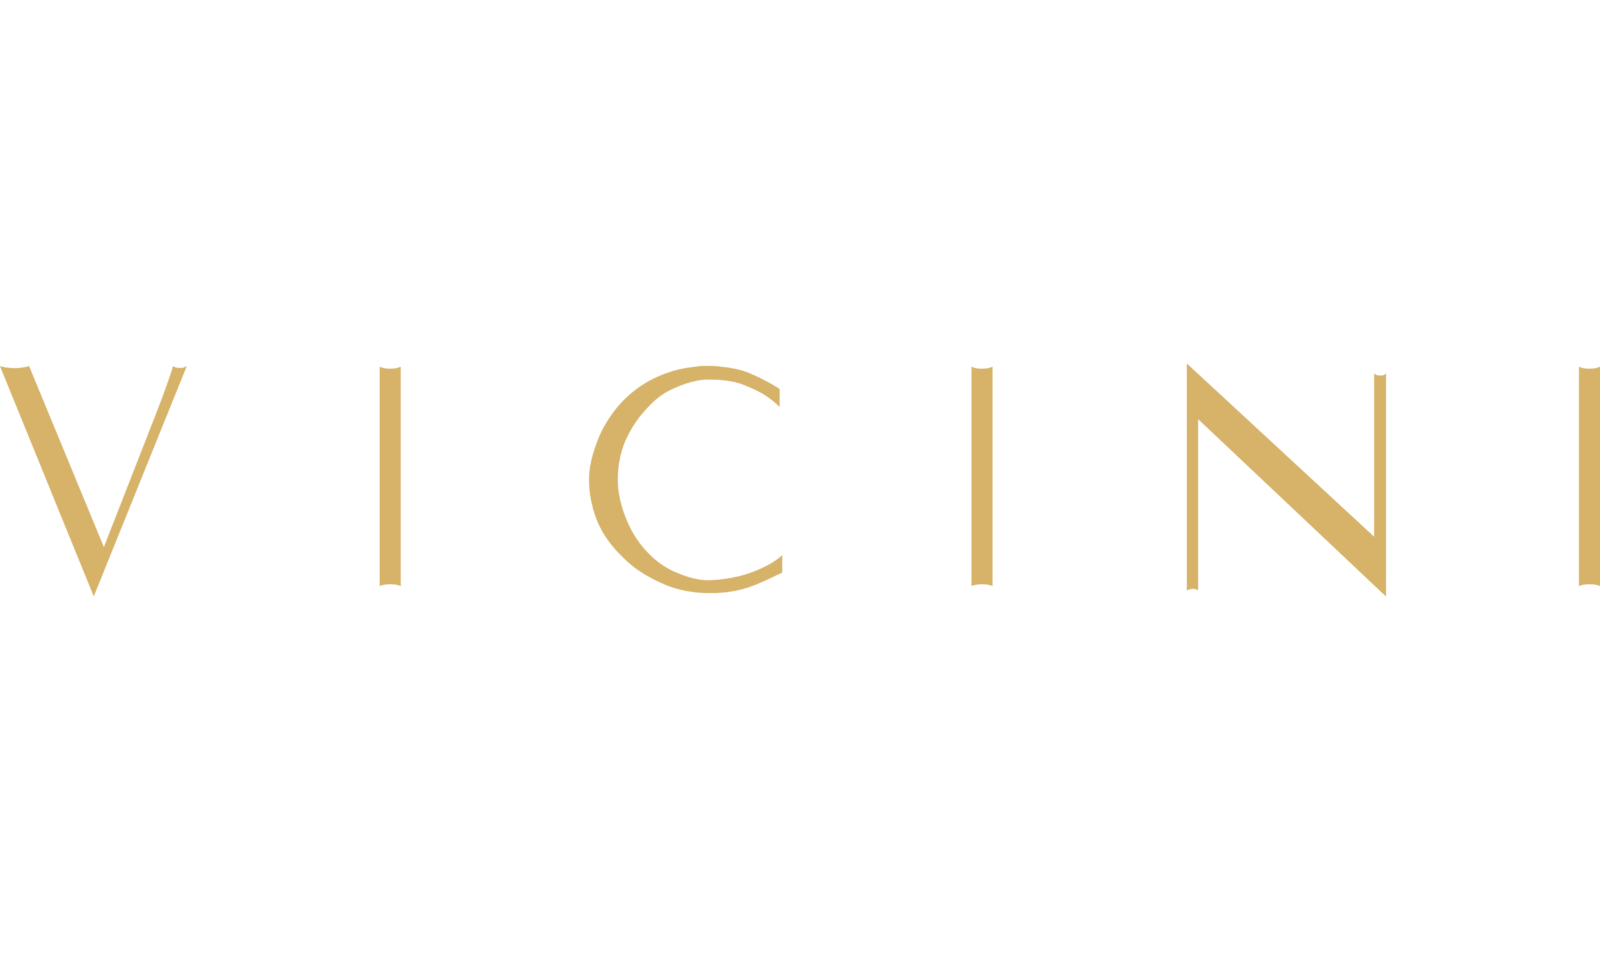 Vicini Logo